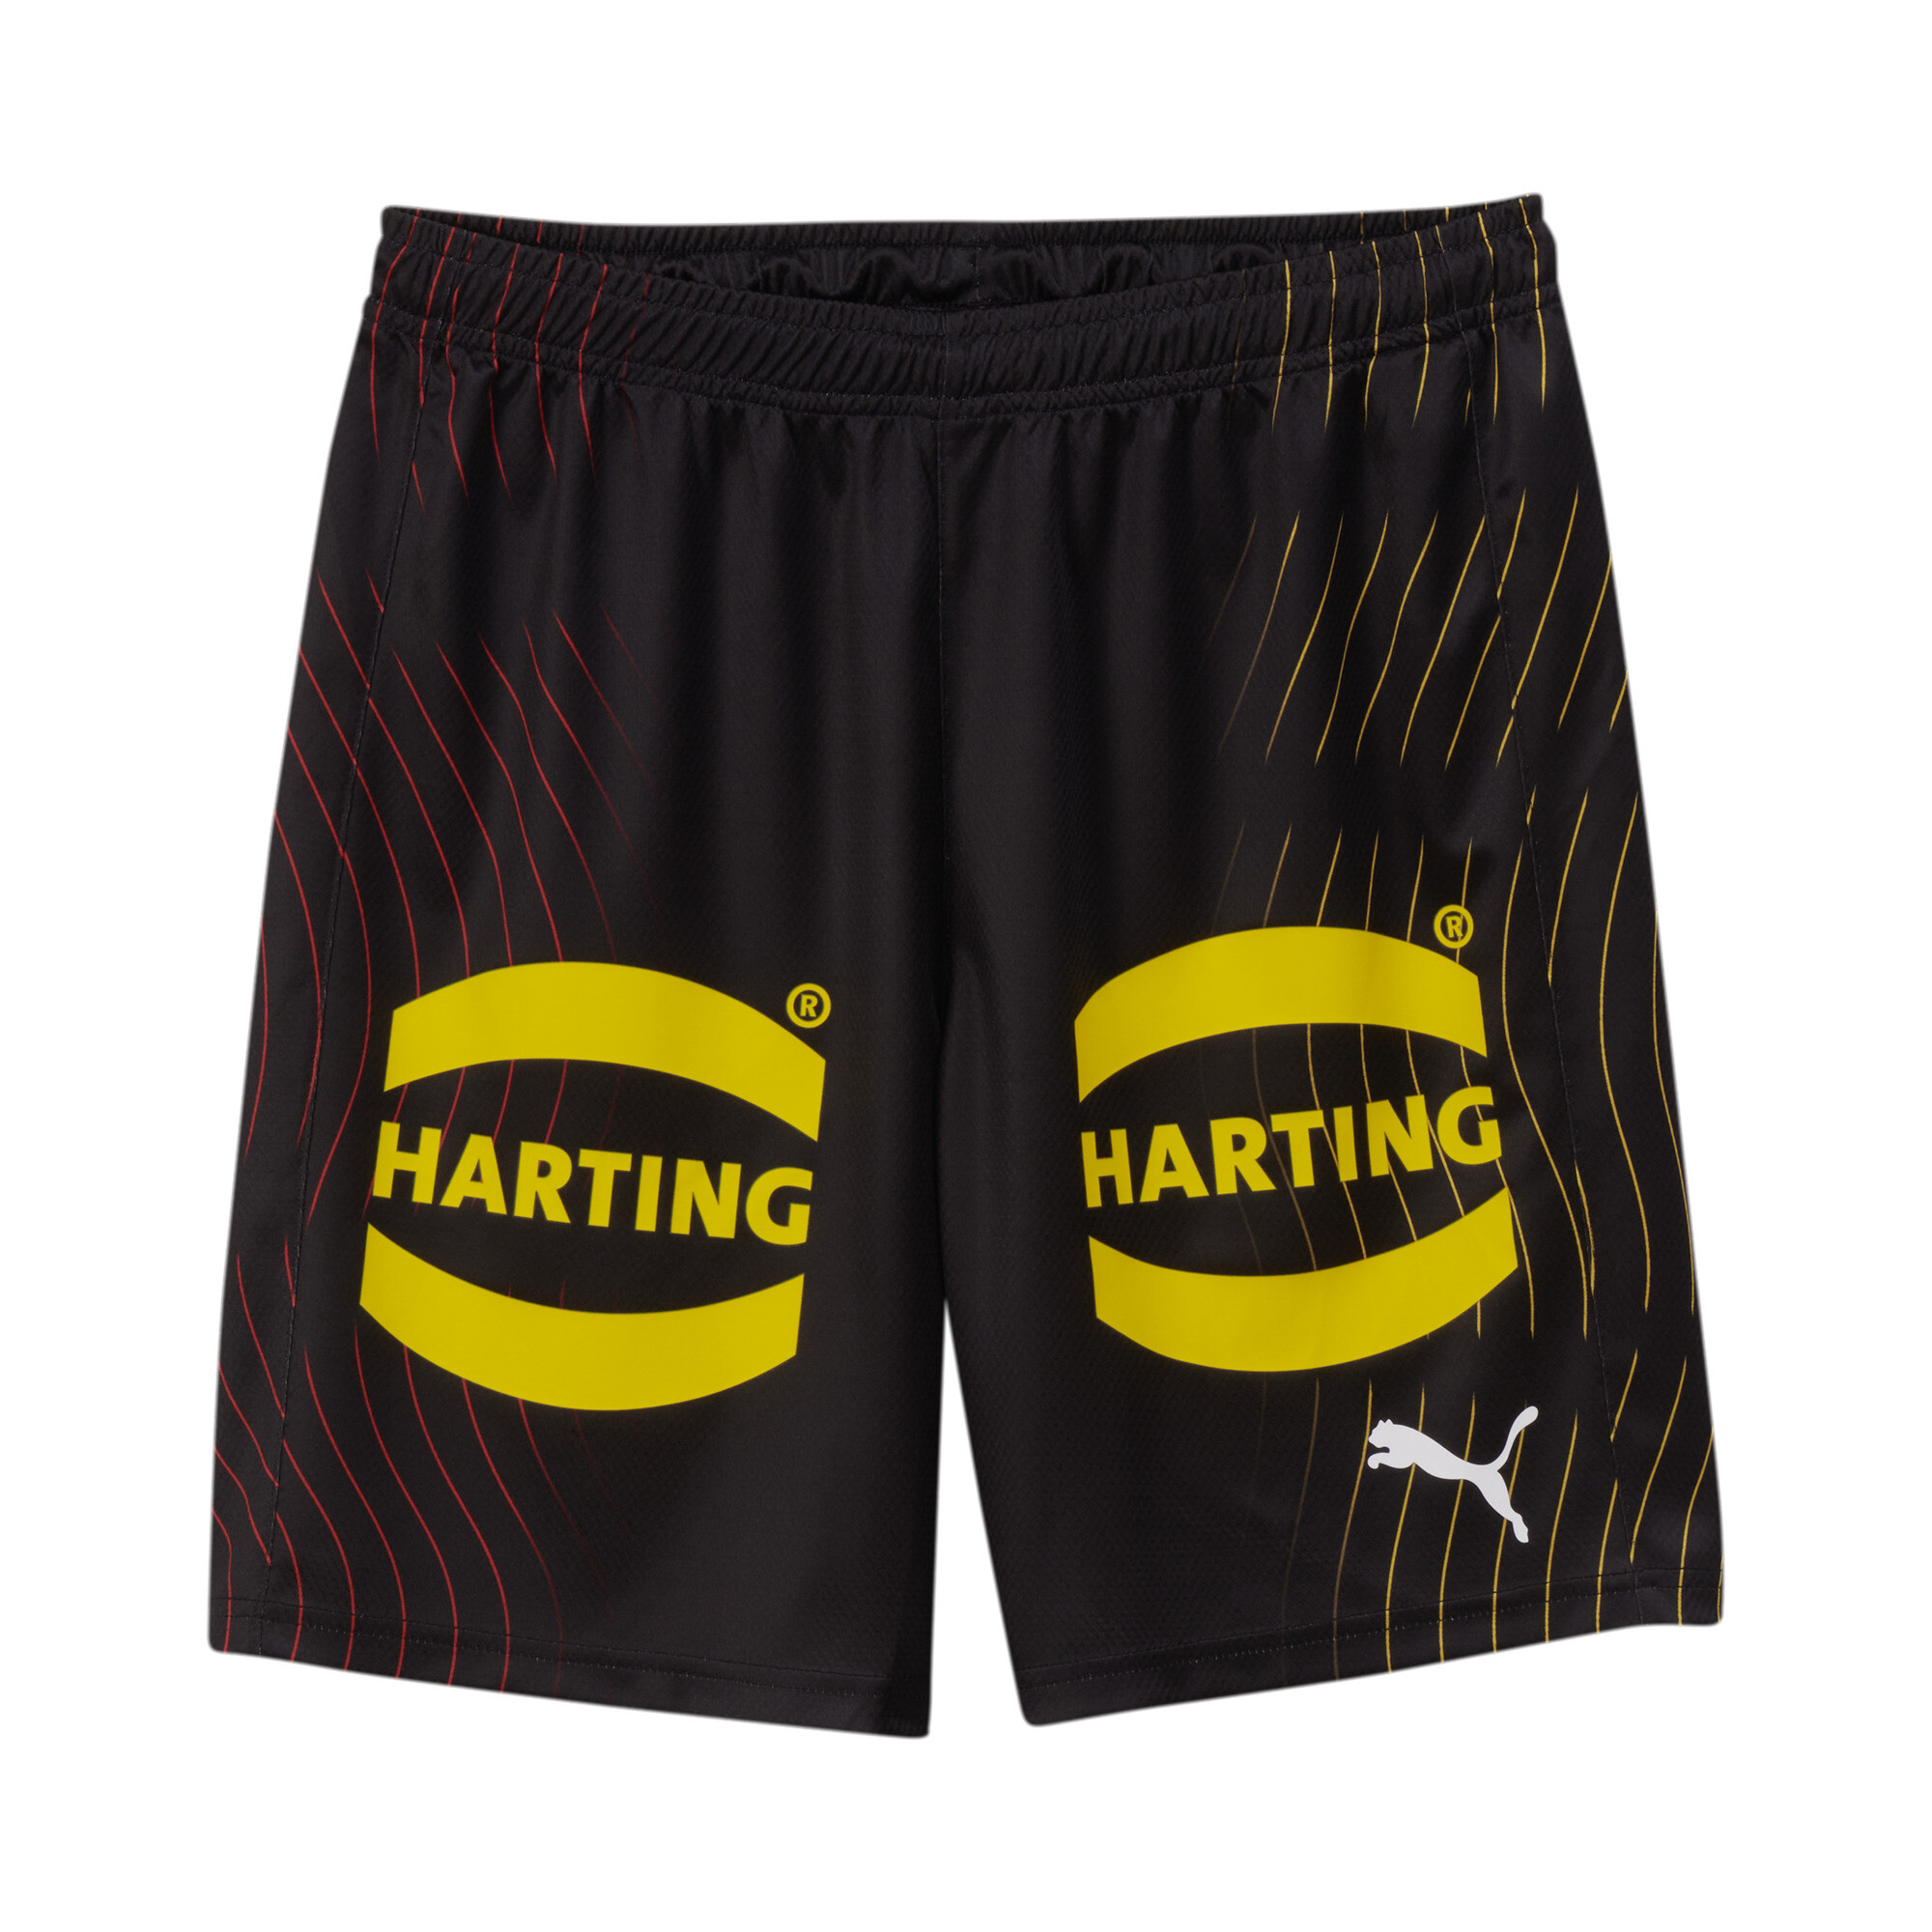 Men's Puma DHB's Handball Shorts, Black, Size S, Clothing